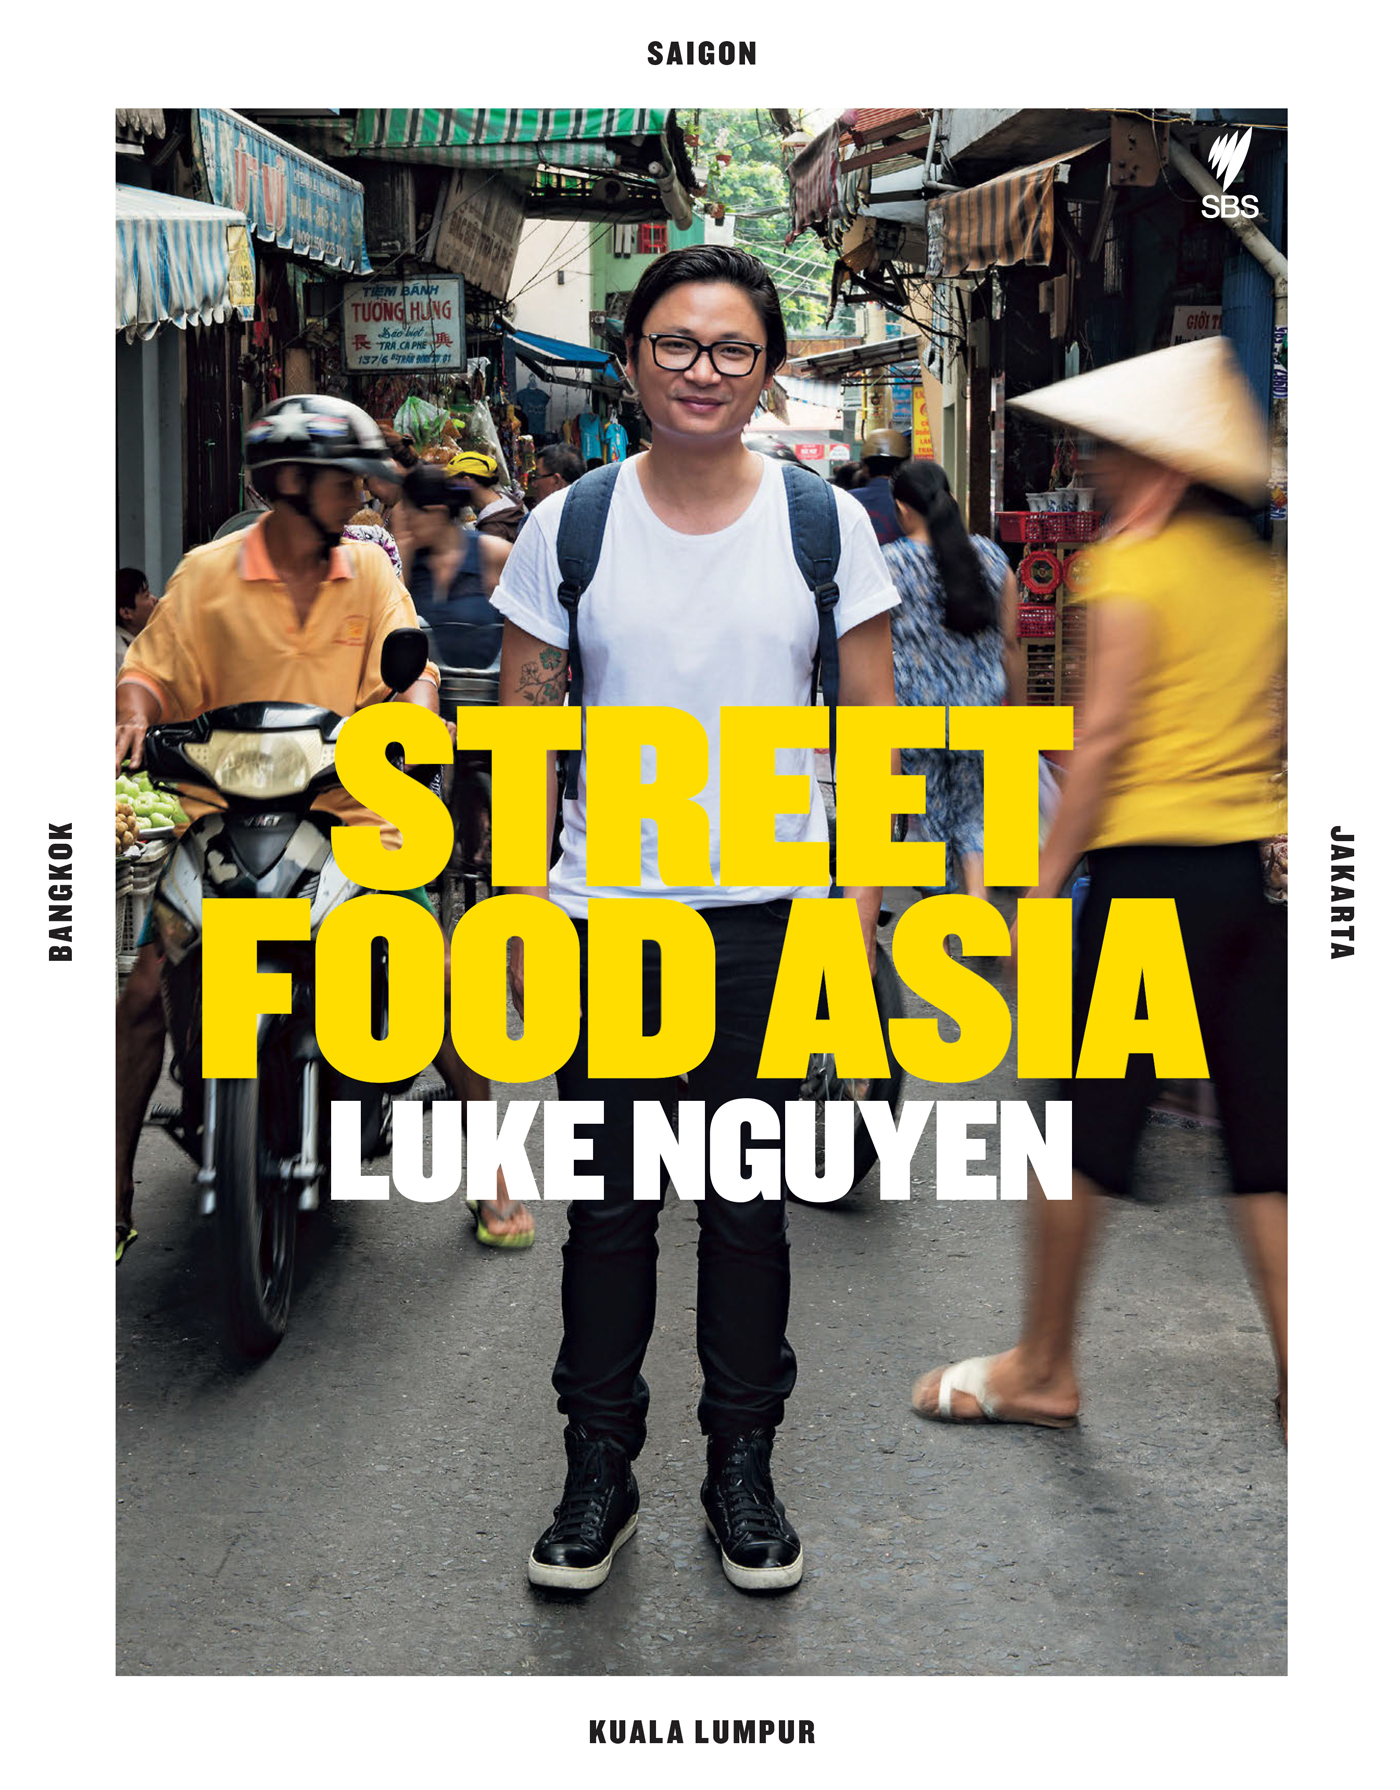 W hether eating fiery som tum on a bustling Bangkok street slurping ph in - photo 1